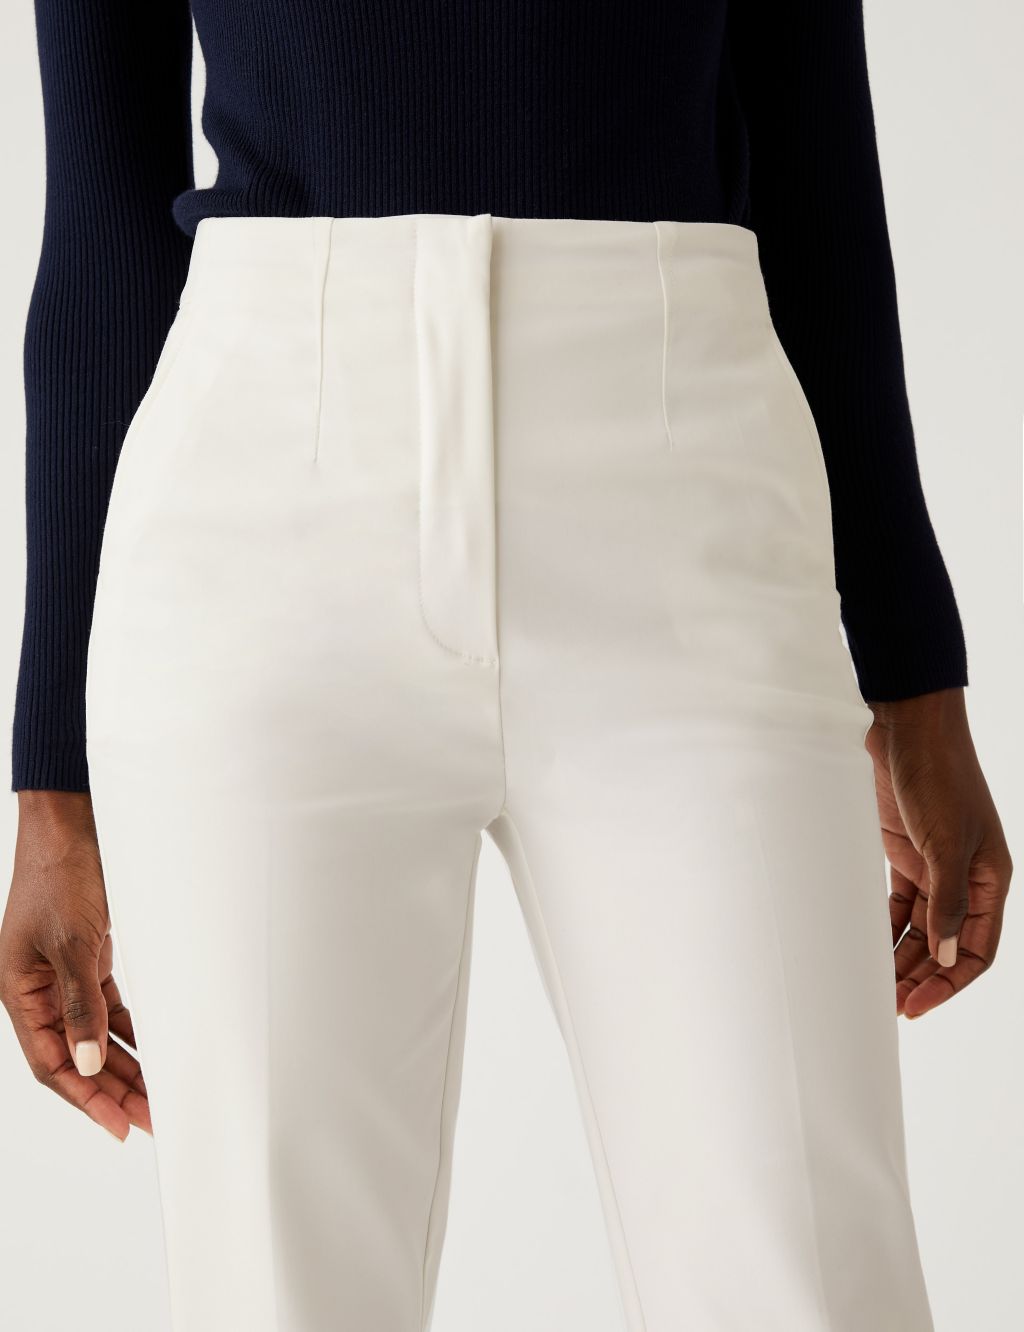 Cotton Blend Slim Fit Ankle Grazer Trousers image 2